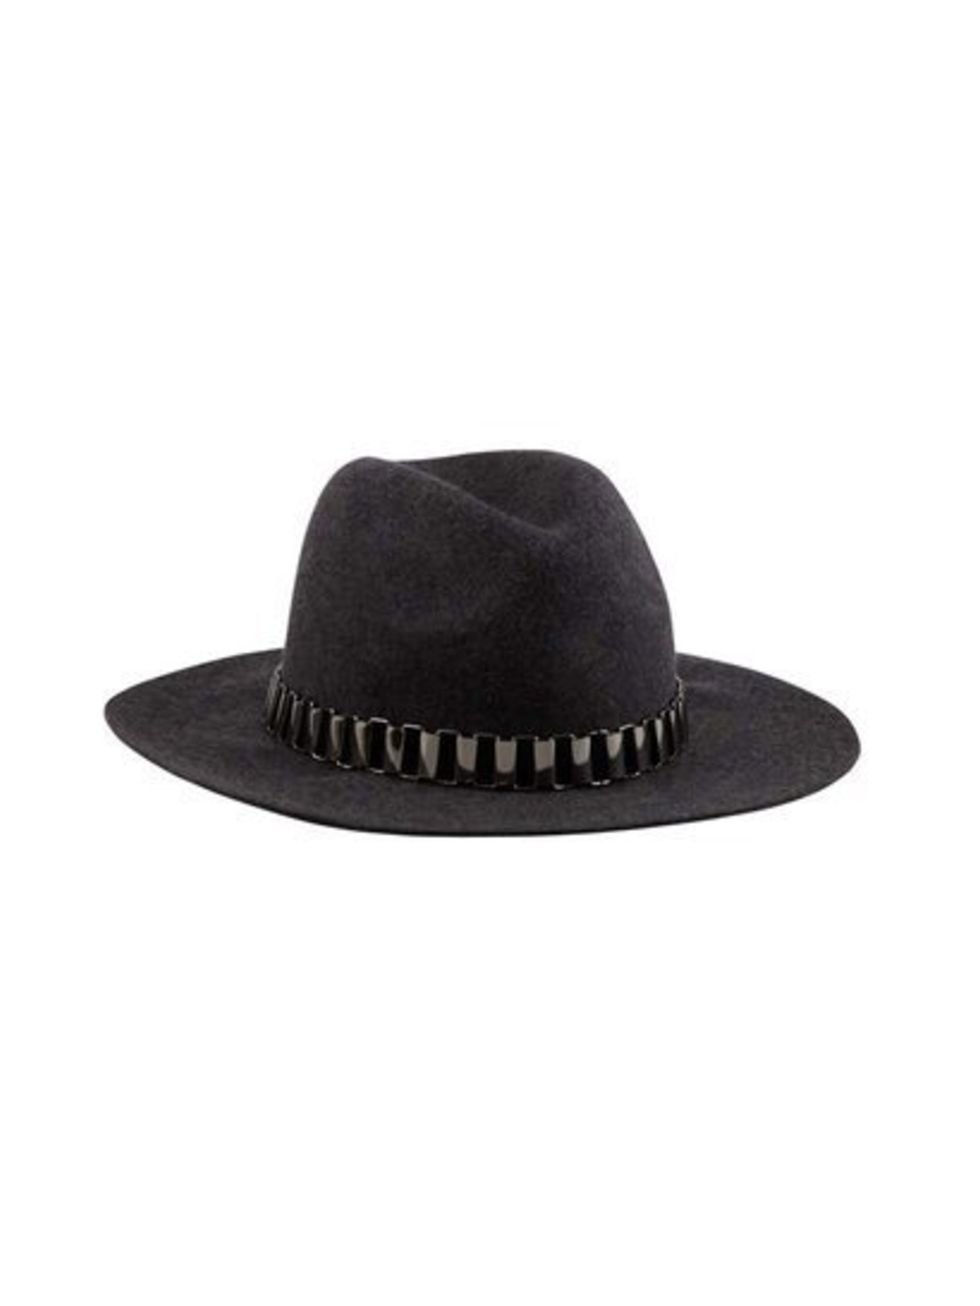 Aldo hat, £20